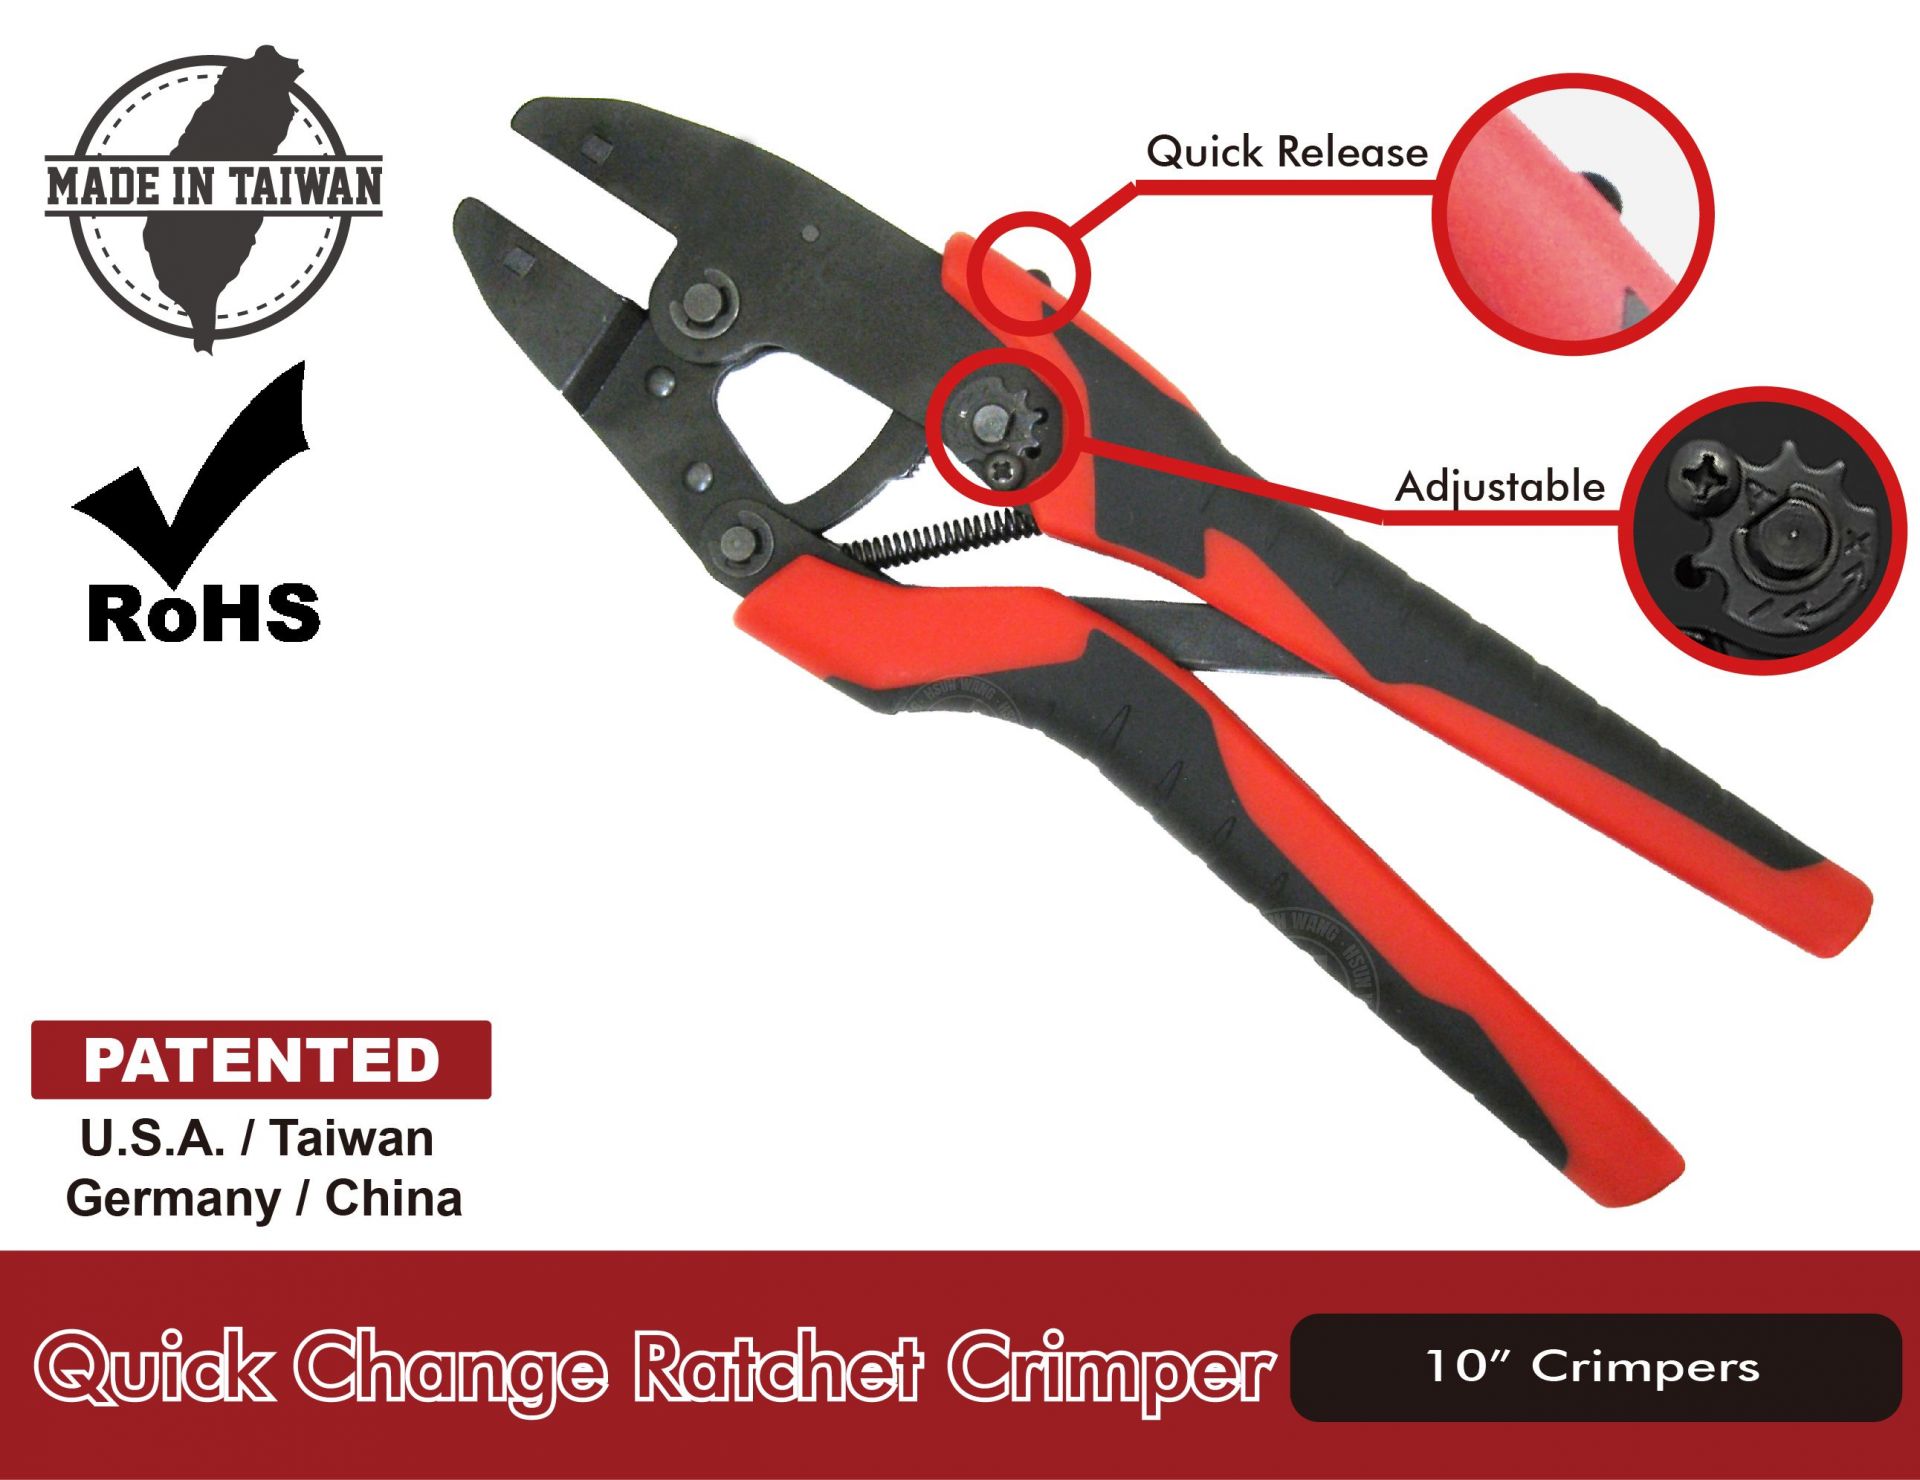 quick Change Ratchet Crimper jei-JEI-Jaw-crimp-crimping-crimp tool-crimping tool-crimp wire-ferrule crimp-ratchet crimp-Taiwan Manufacturer-hsunwang-licrim-hsunwang.com
